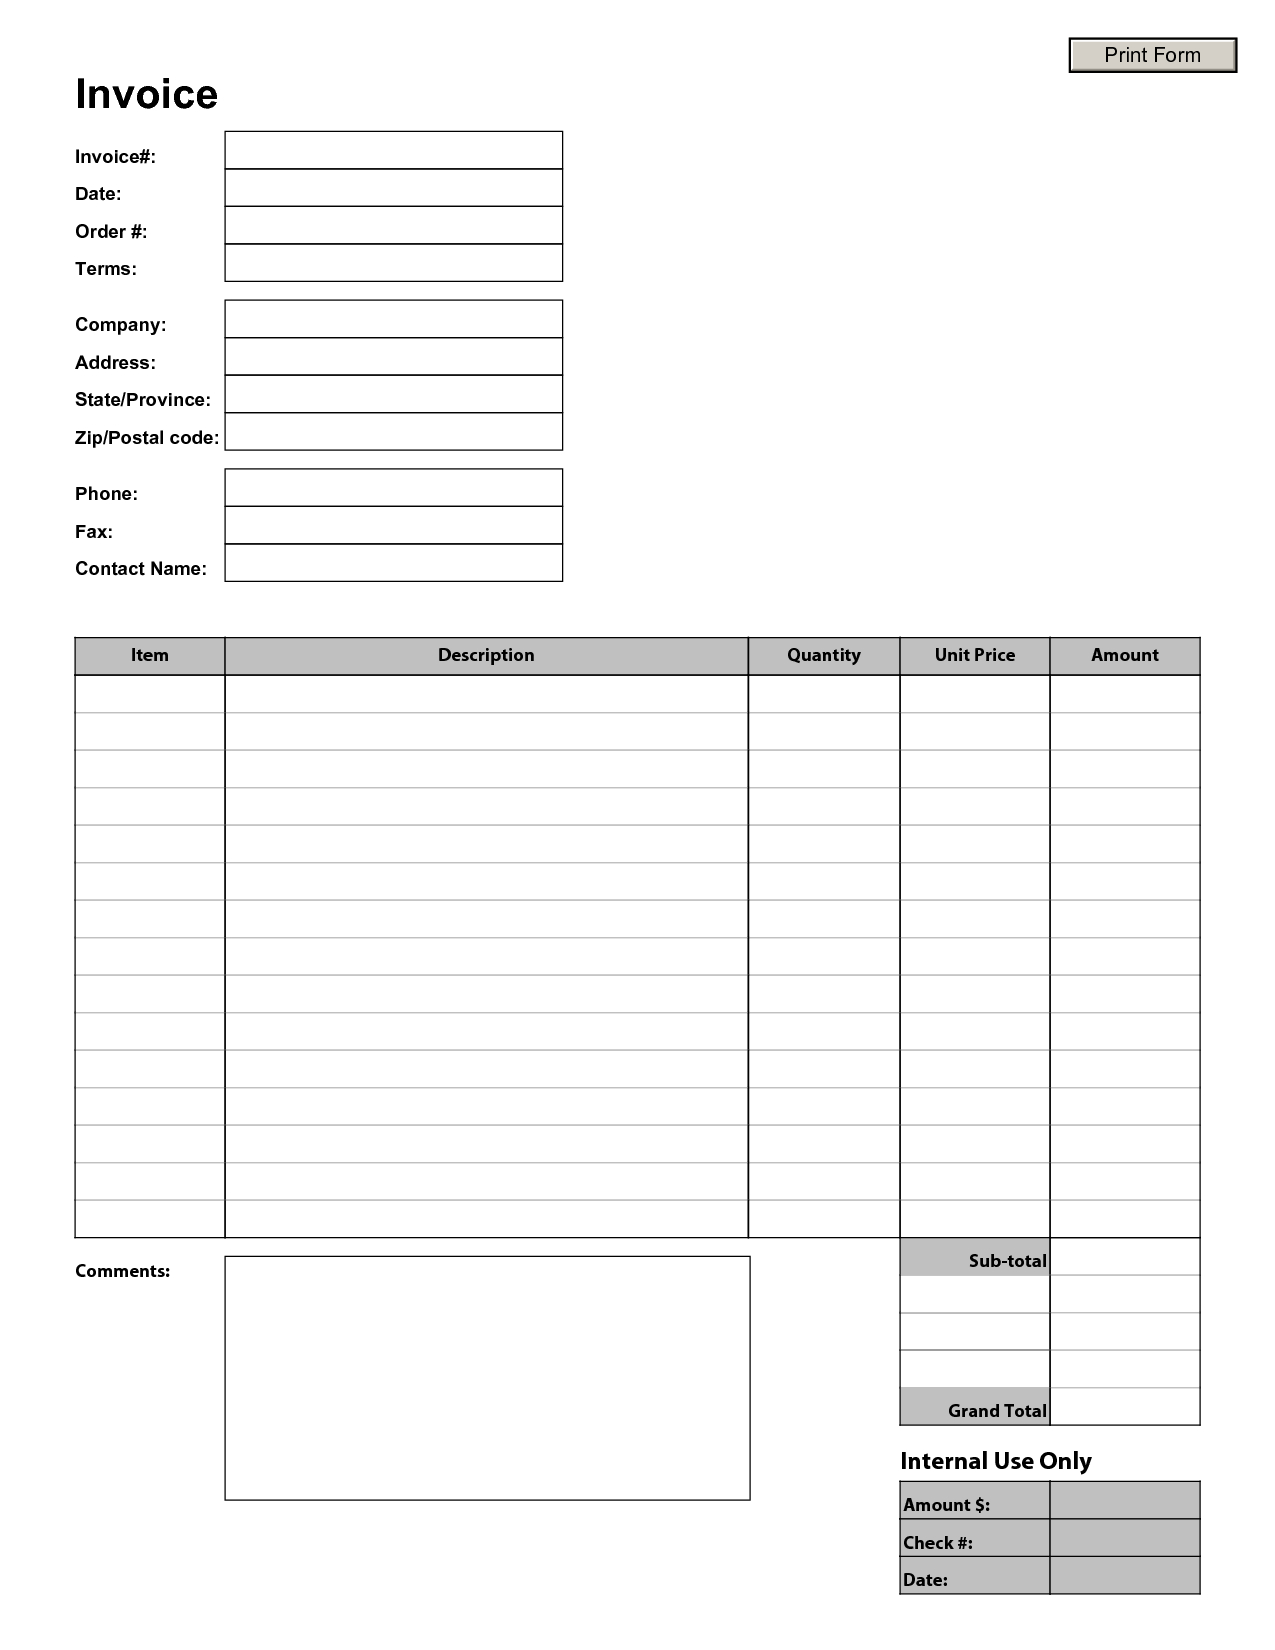 Blank Invoice Template | Blank Invoice | Arsenal | Printable Invoice - Free Printable Invoice Forms